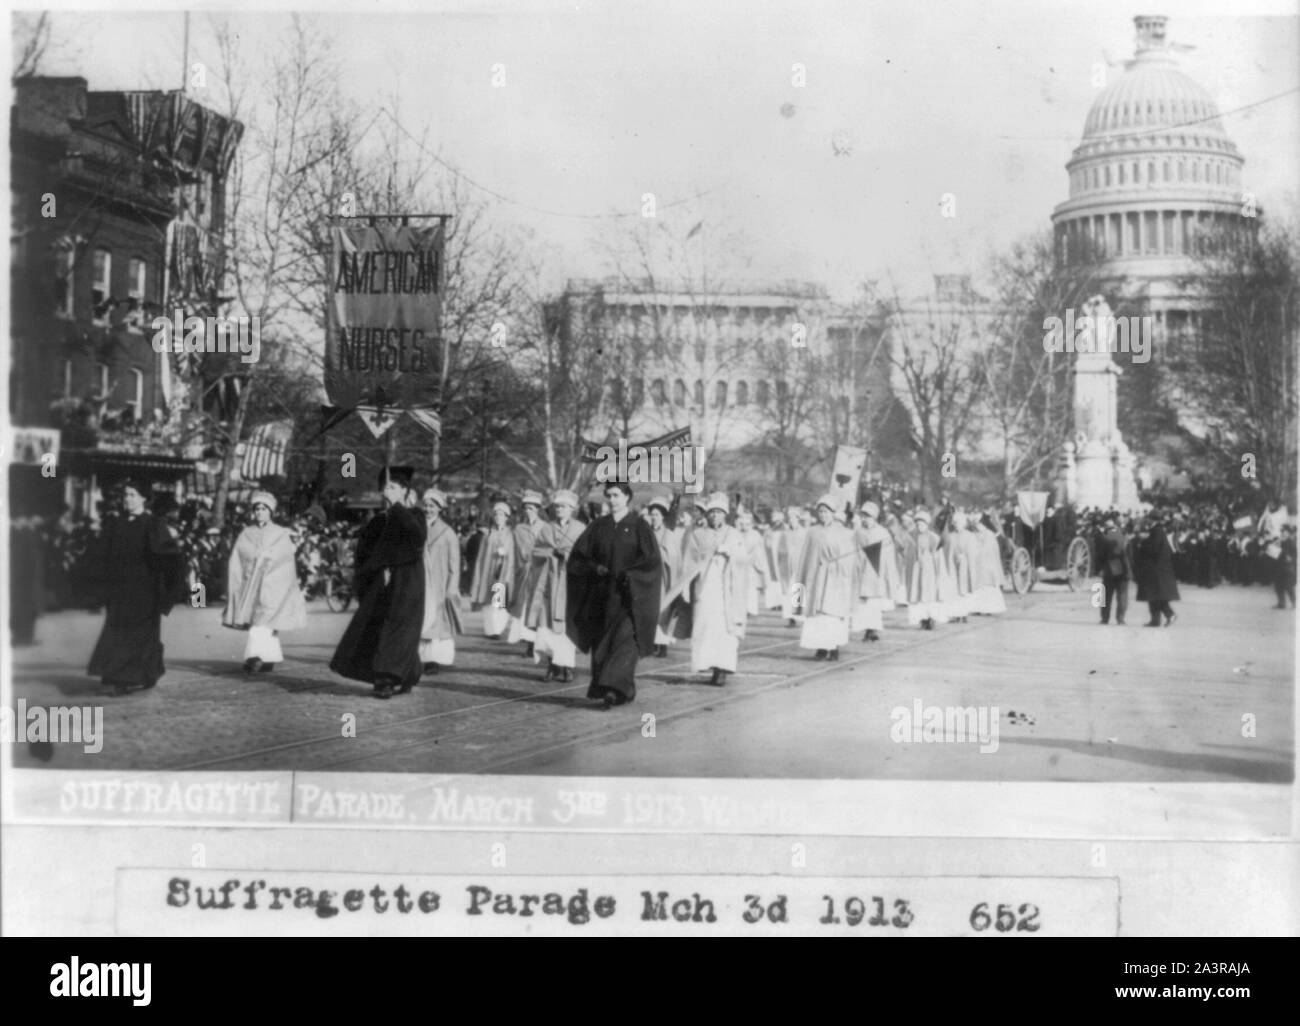 Suffragette parade März 3, 1913, Washington, D.C. Stockfoto